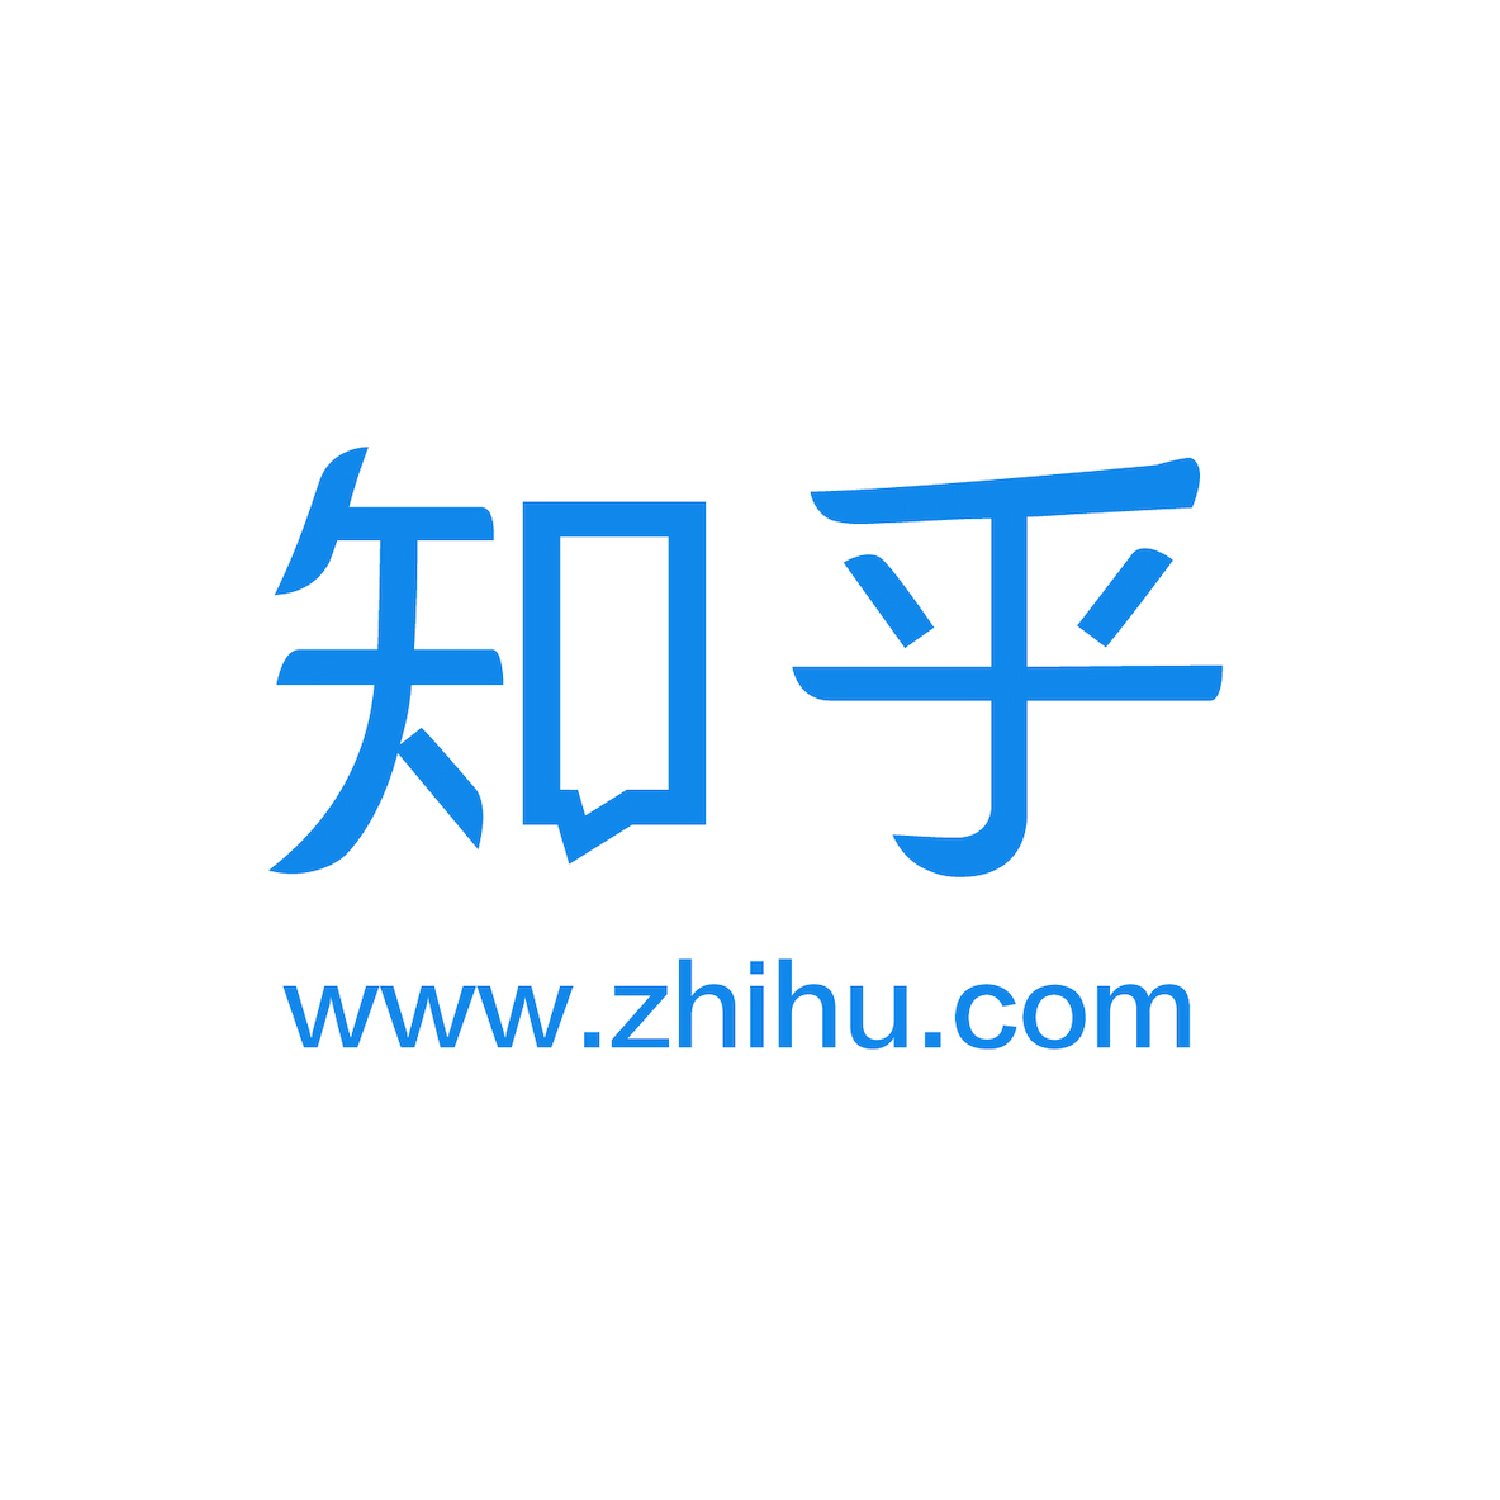 zhihu-01.jpg